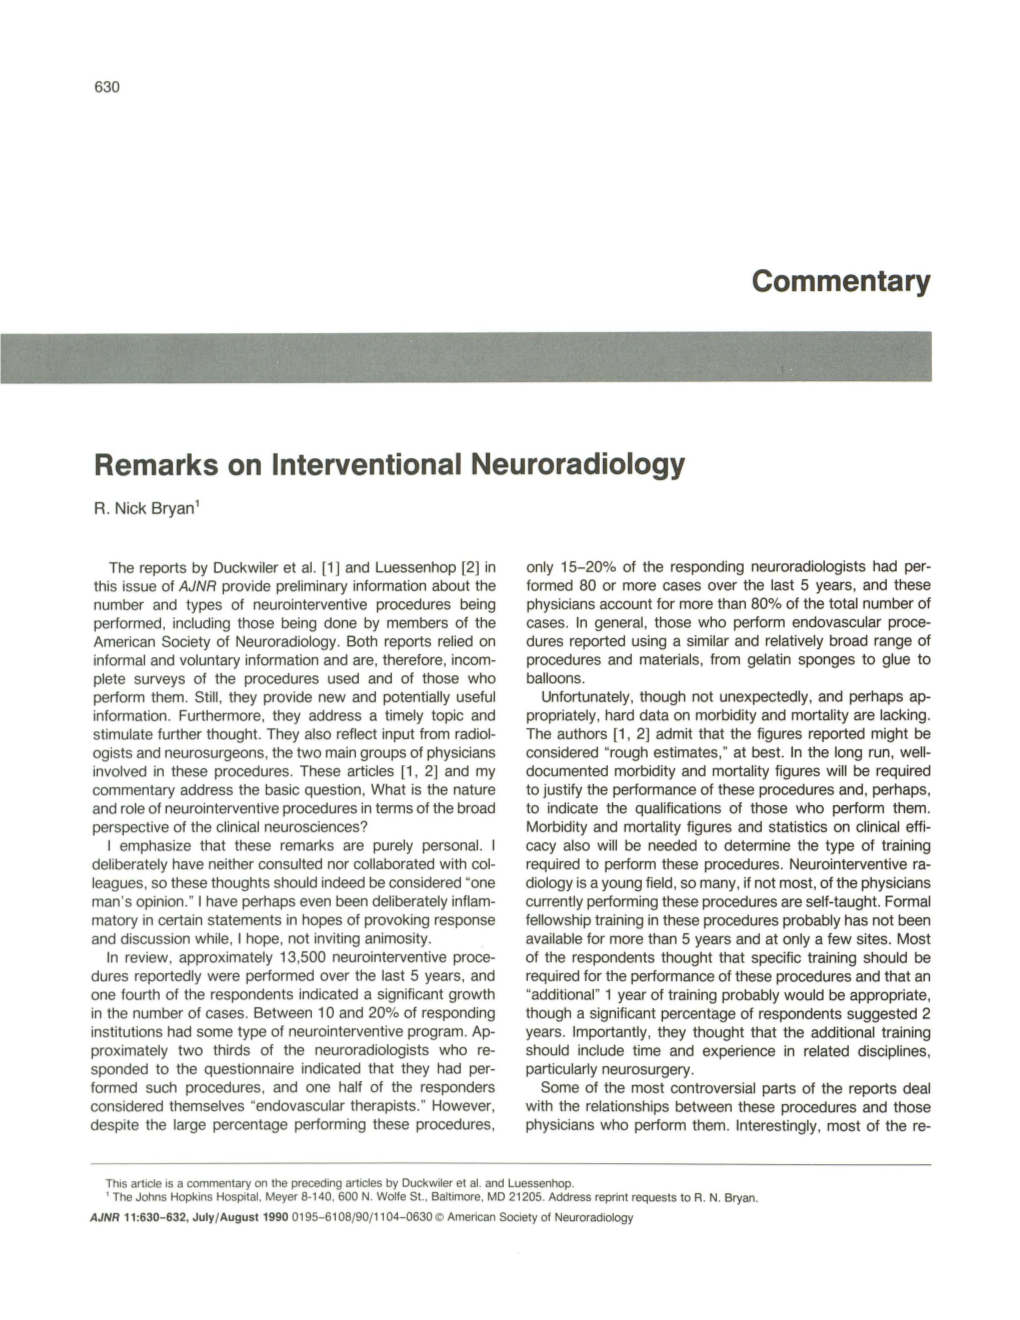 Remarks on Interventional Neuroradiology